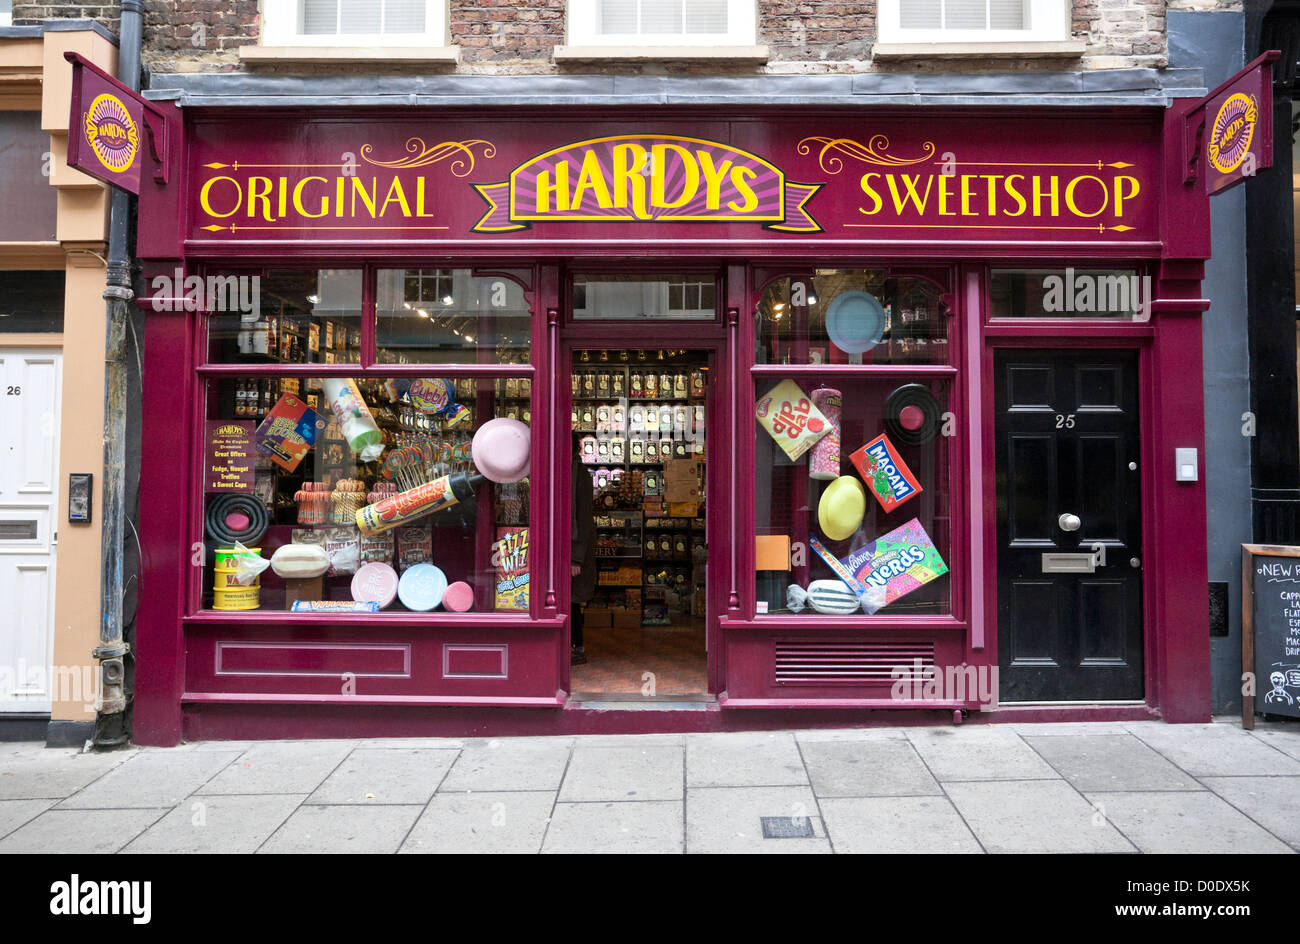 Hardys original sweet shop hi-res stock photography and images - Alamy